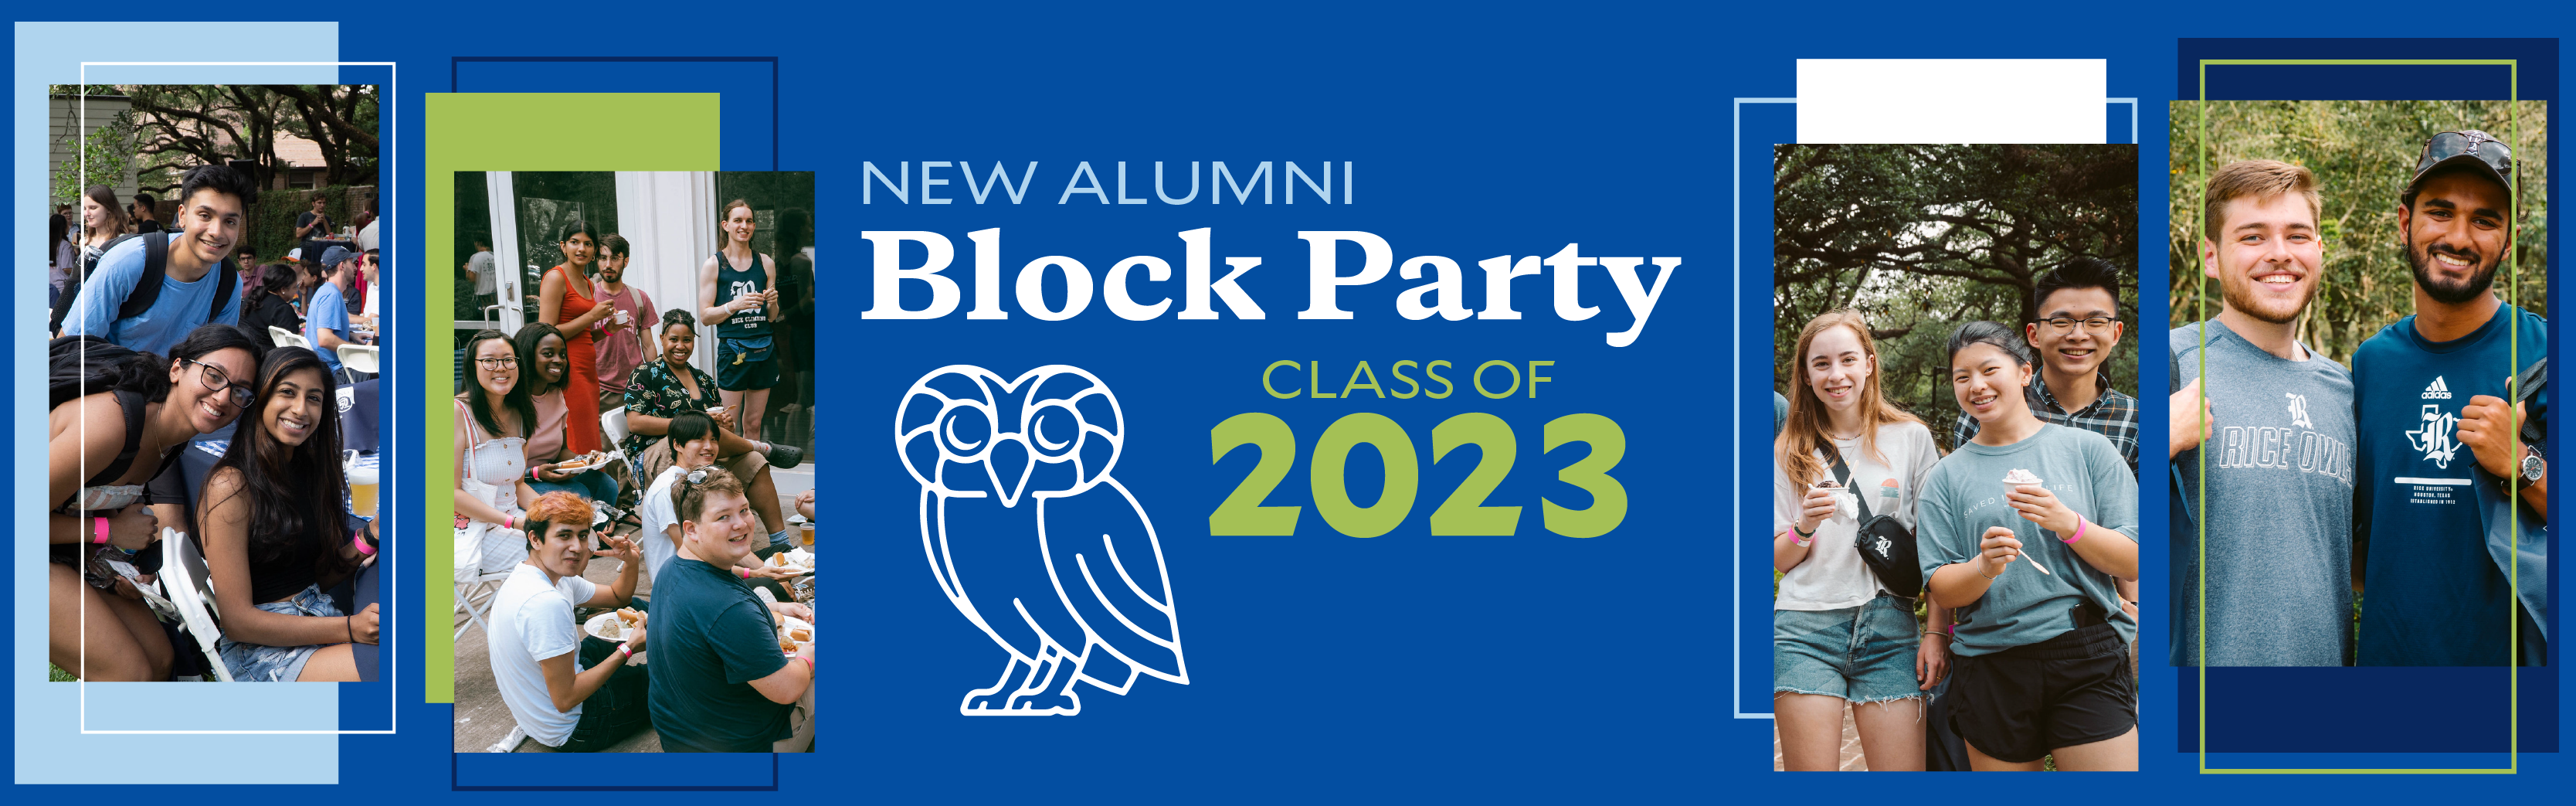 New Alumni Block Party 2023